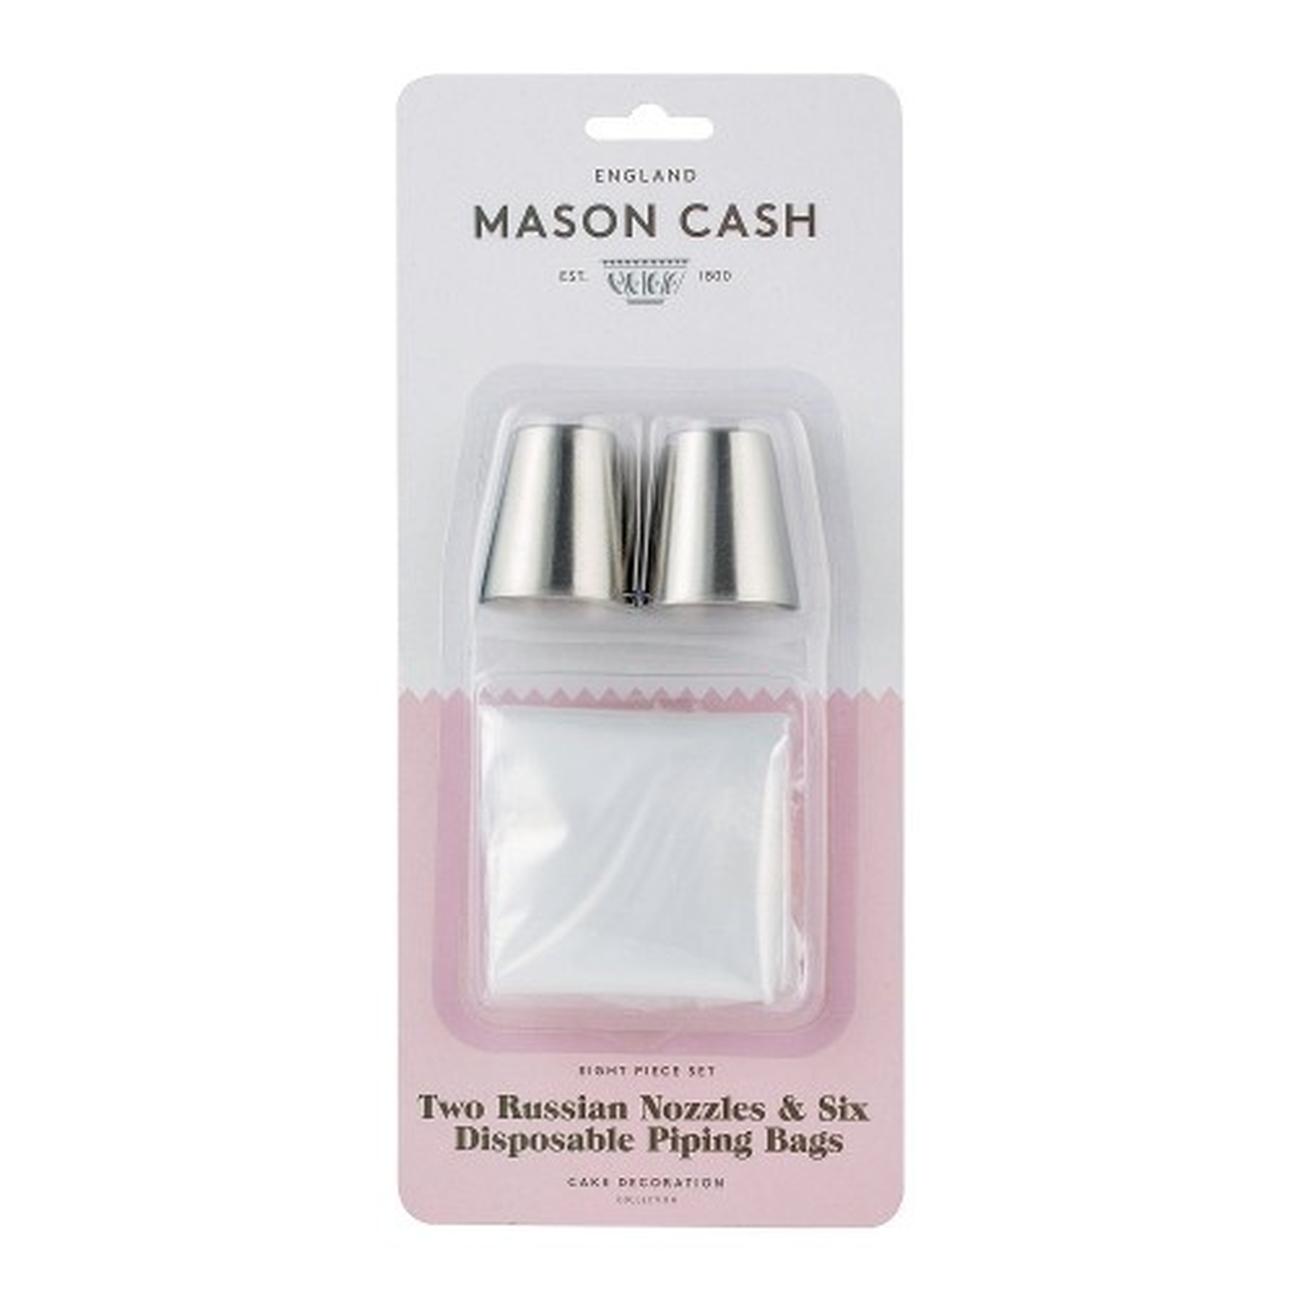 mason-cash-set-of-2-russian-nozzles-and-6-icing-bags - Mason Cash Set of 2 Russian Nozzles & 6 Bags